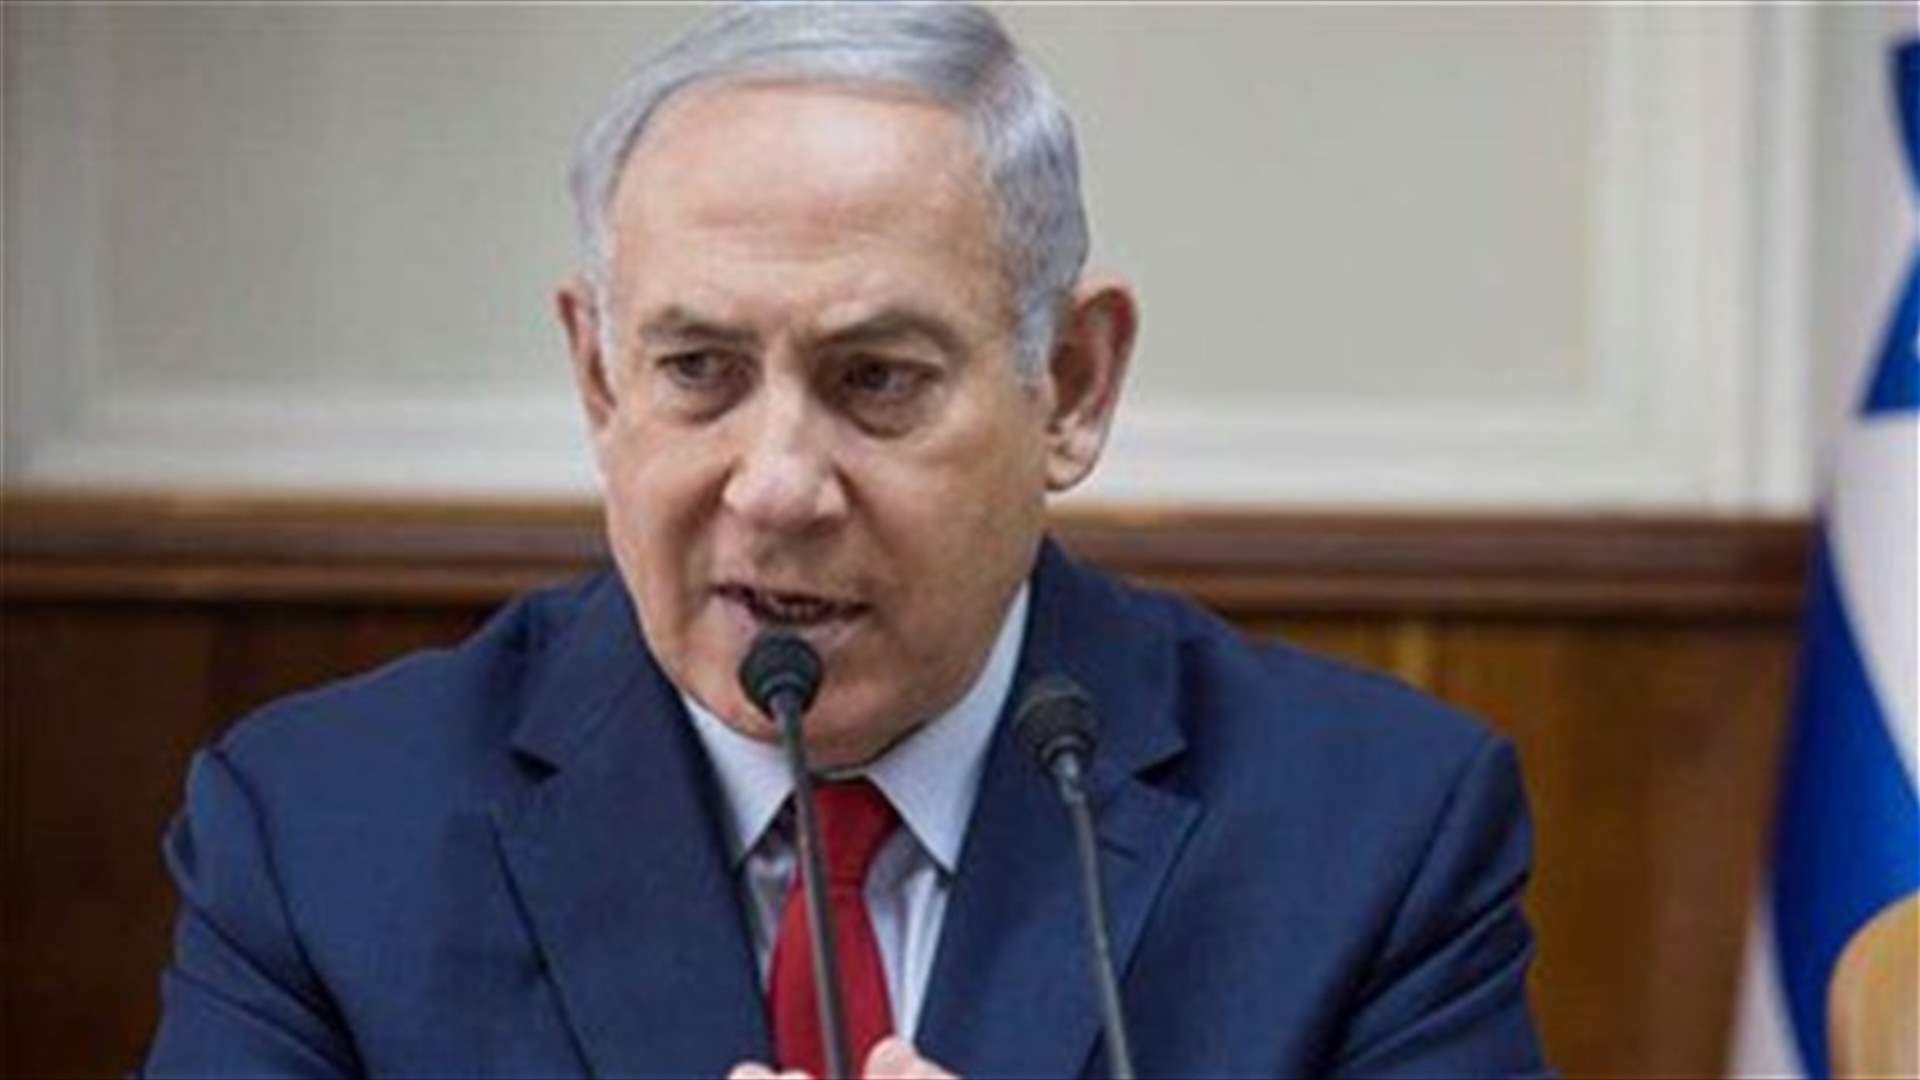 Israel and Chad resume diplomatic ties - Netanyahu&#39;s office